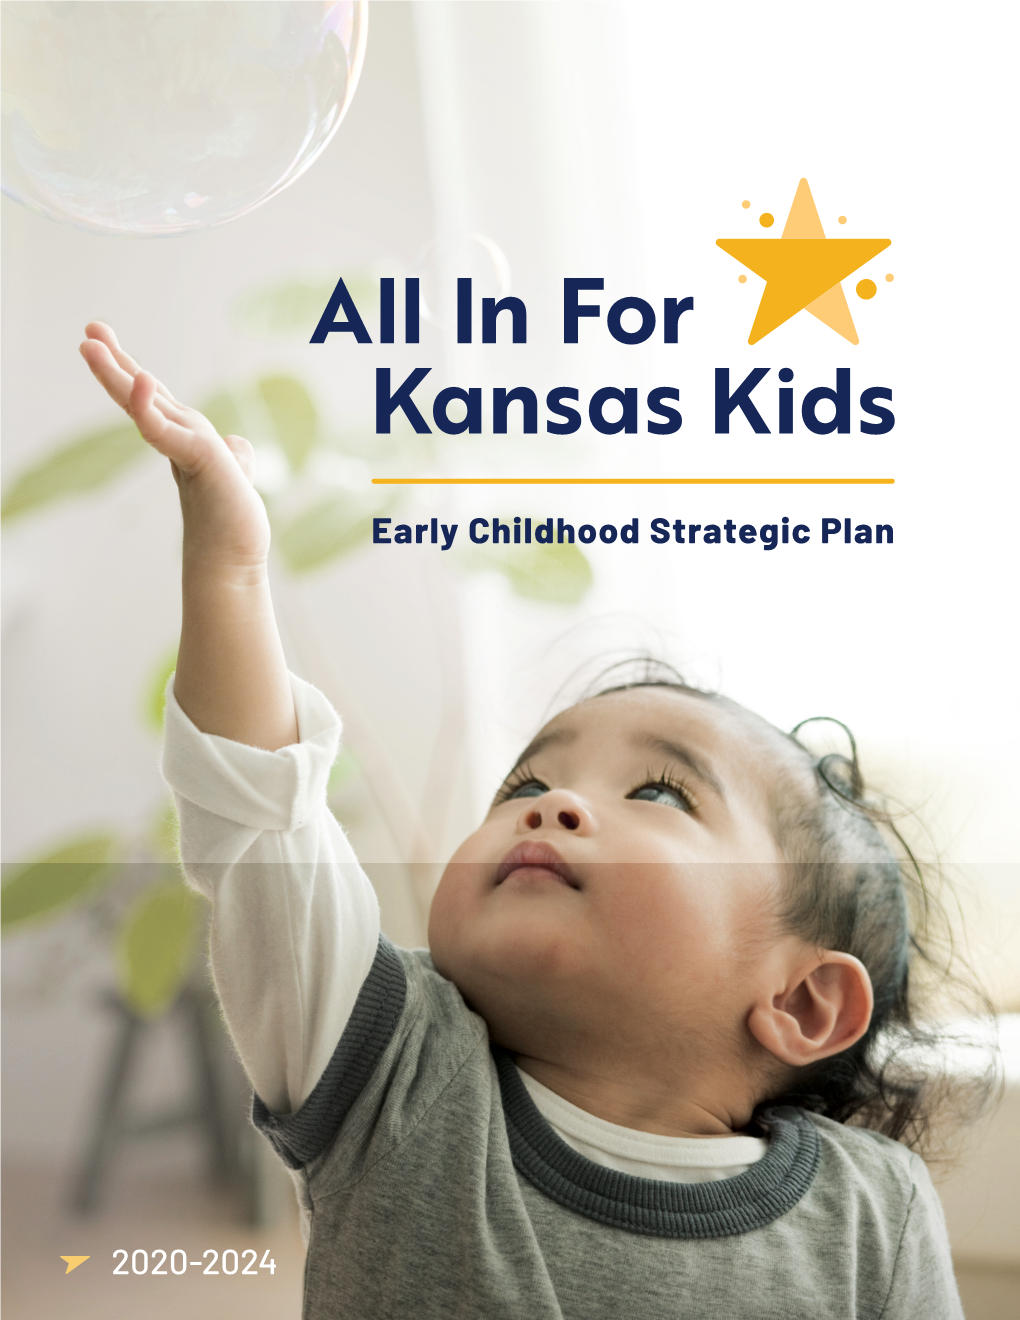 All in for Kansas Kids Early Childhood Strategic Plan